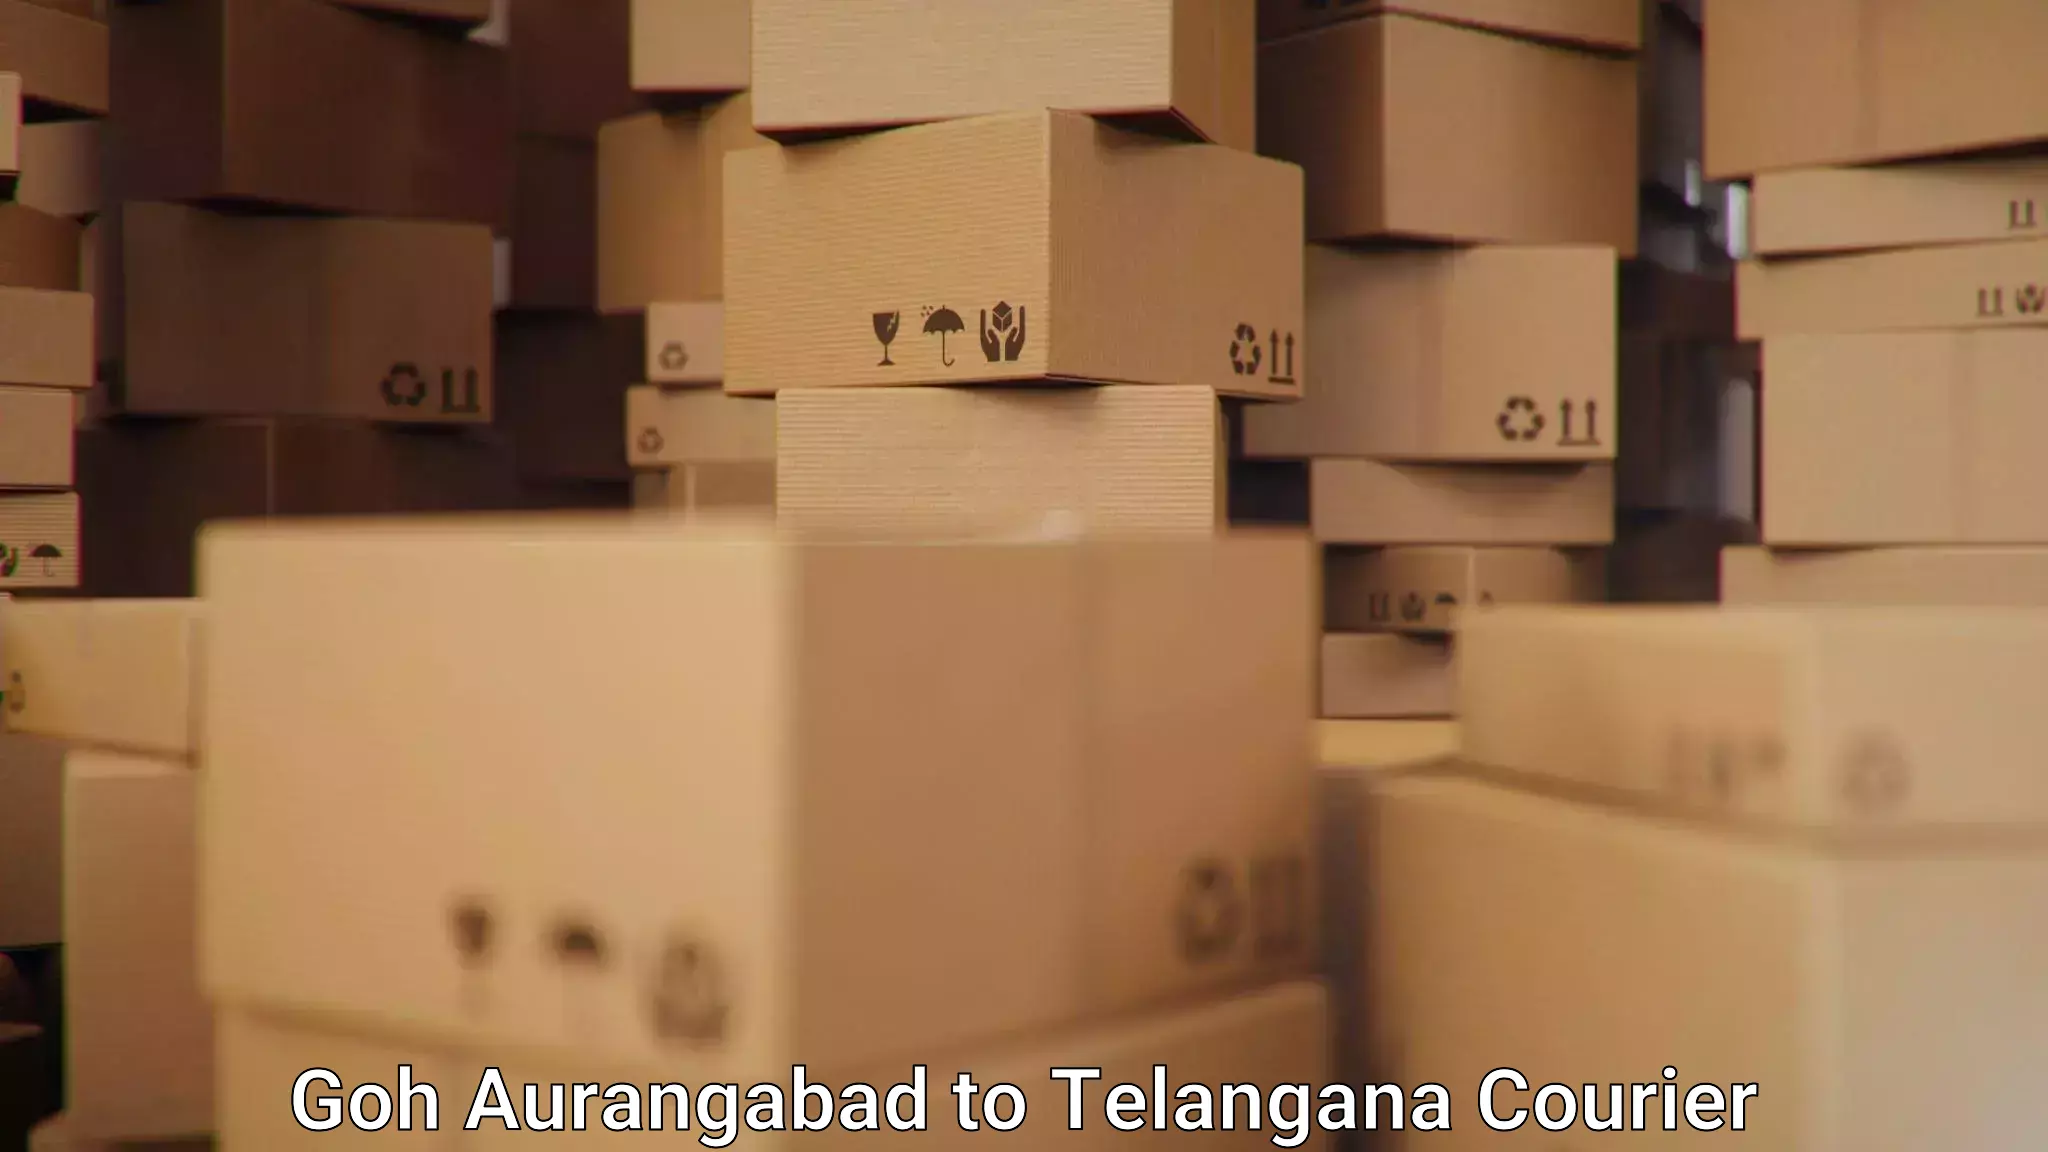 State-of-the-art courier technology Goh Aurangabad to Medak